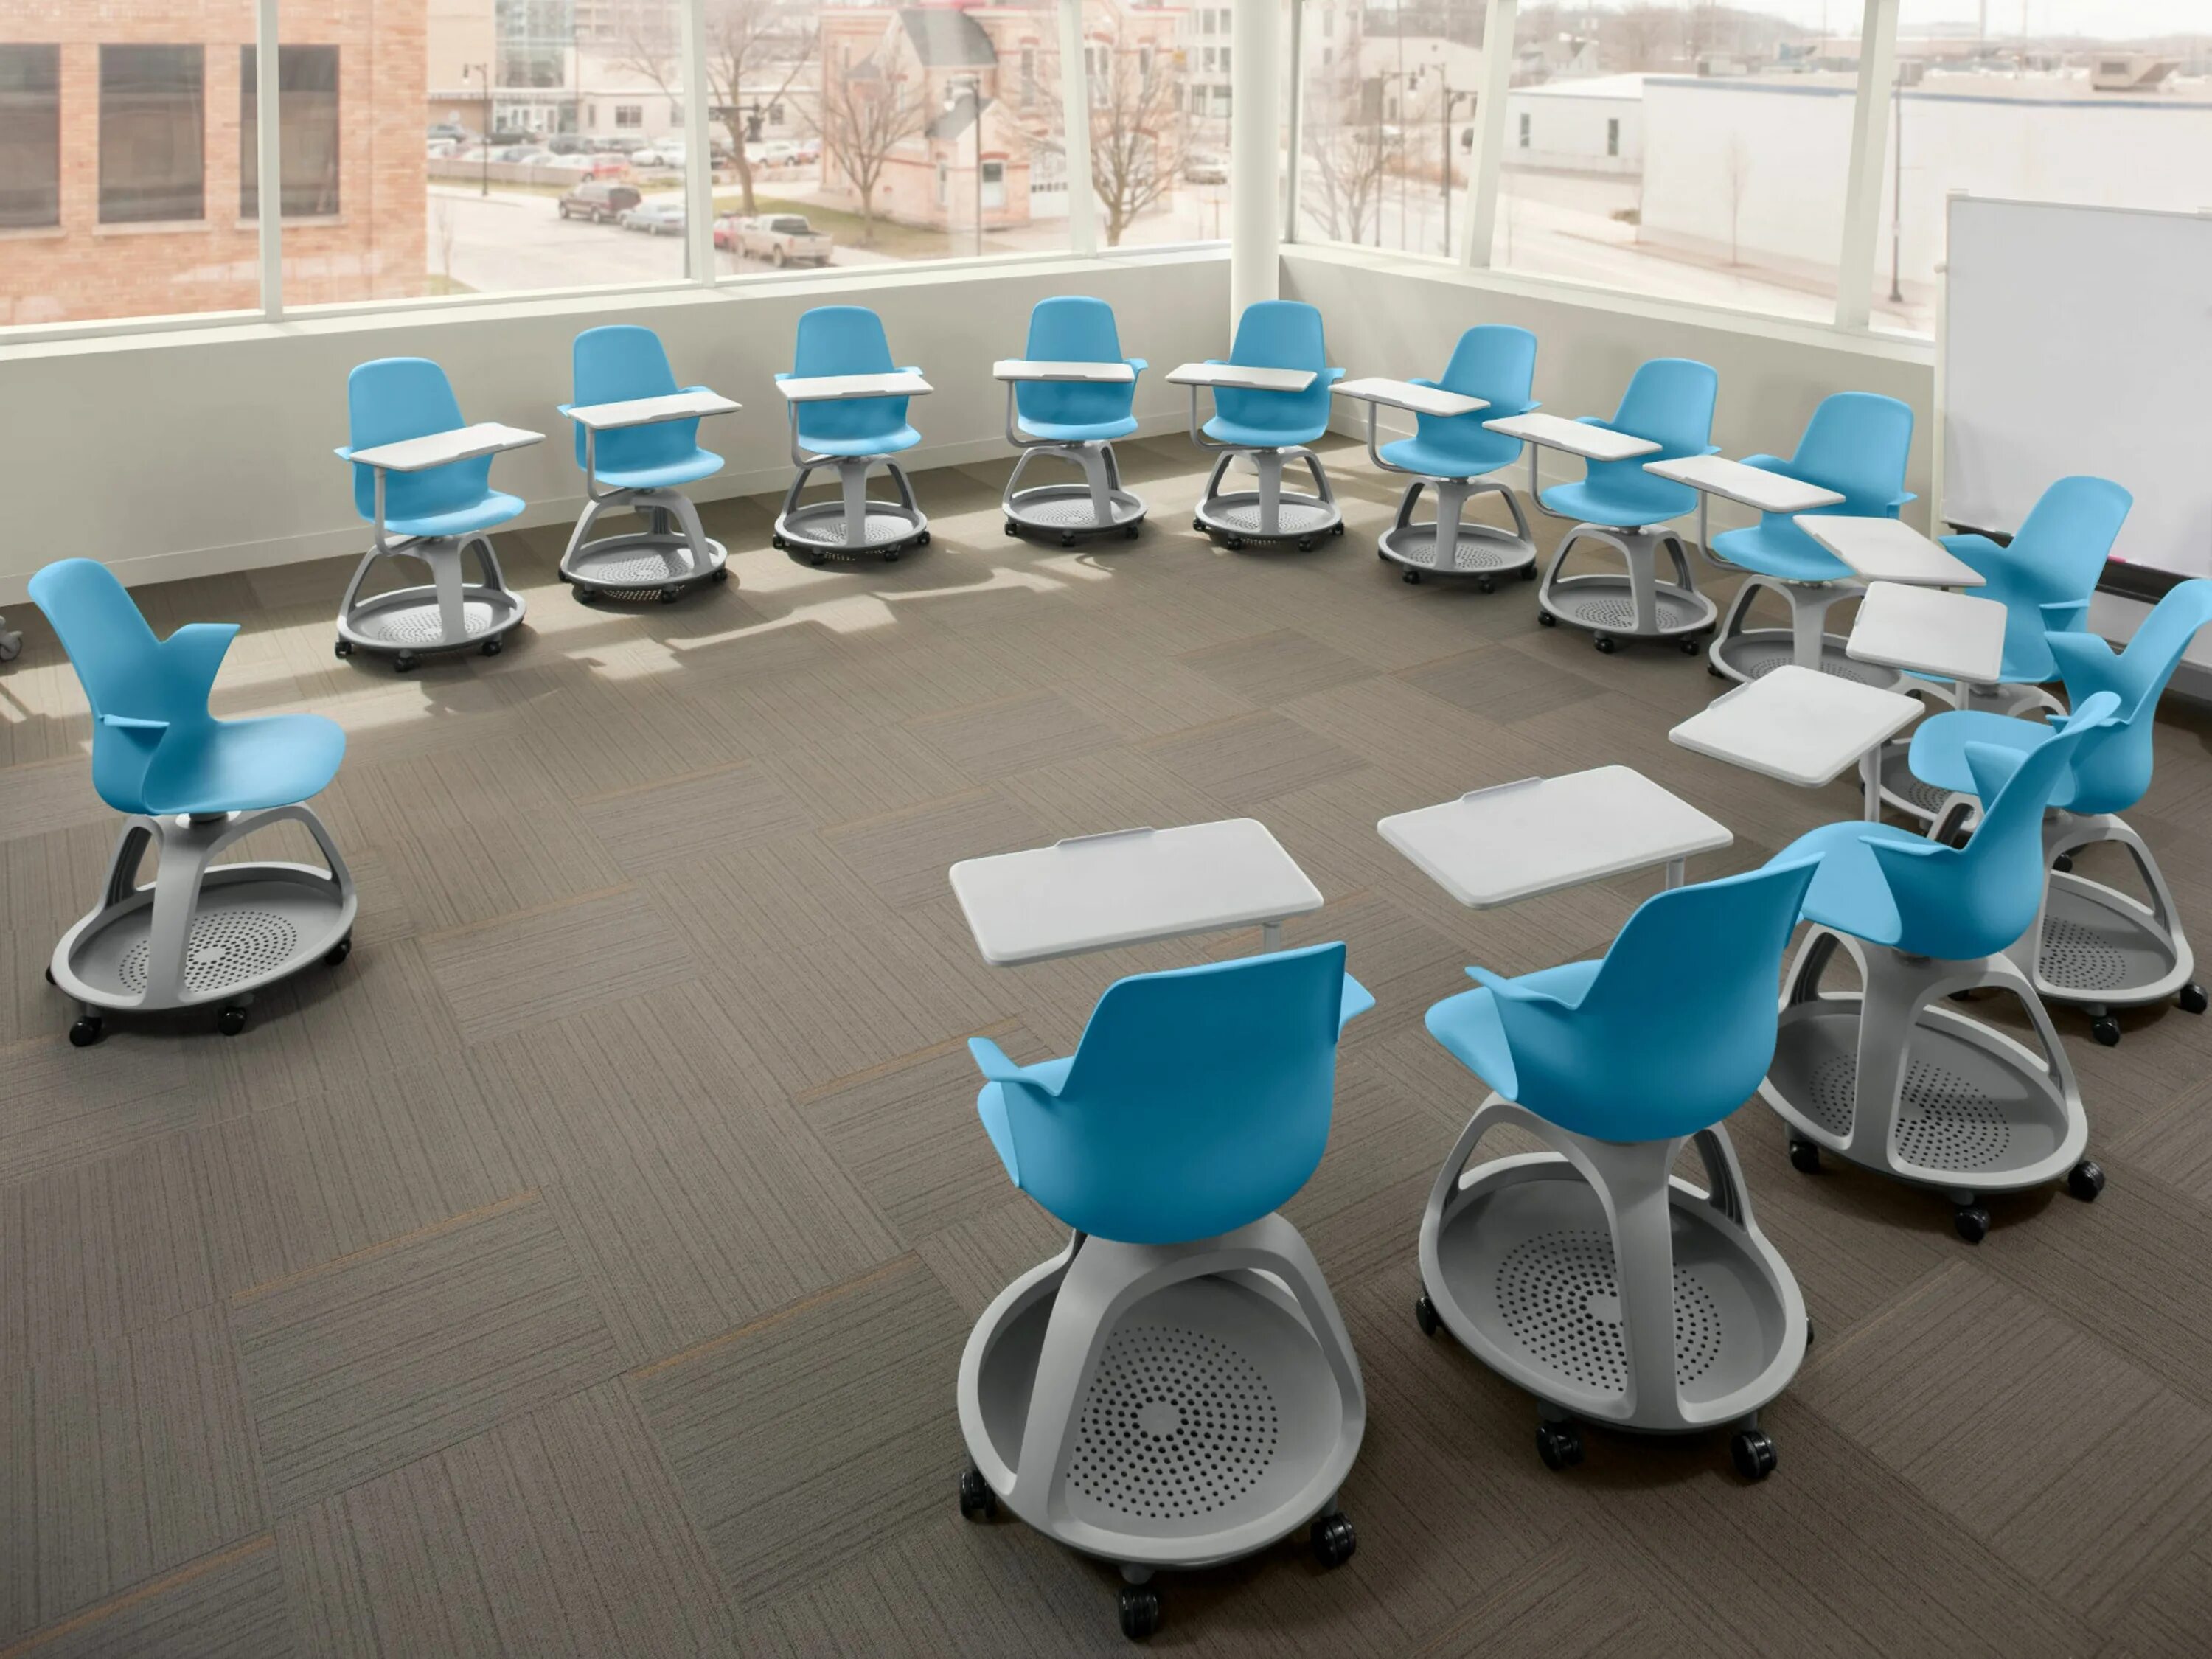 Steelcase node. Node Chair от Steelcase. Класс будущего. Школьный класс будущего. Массажные классы